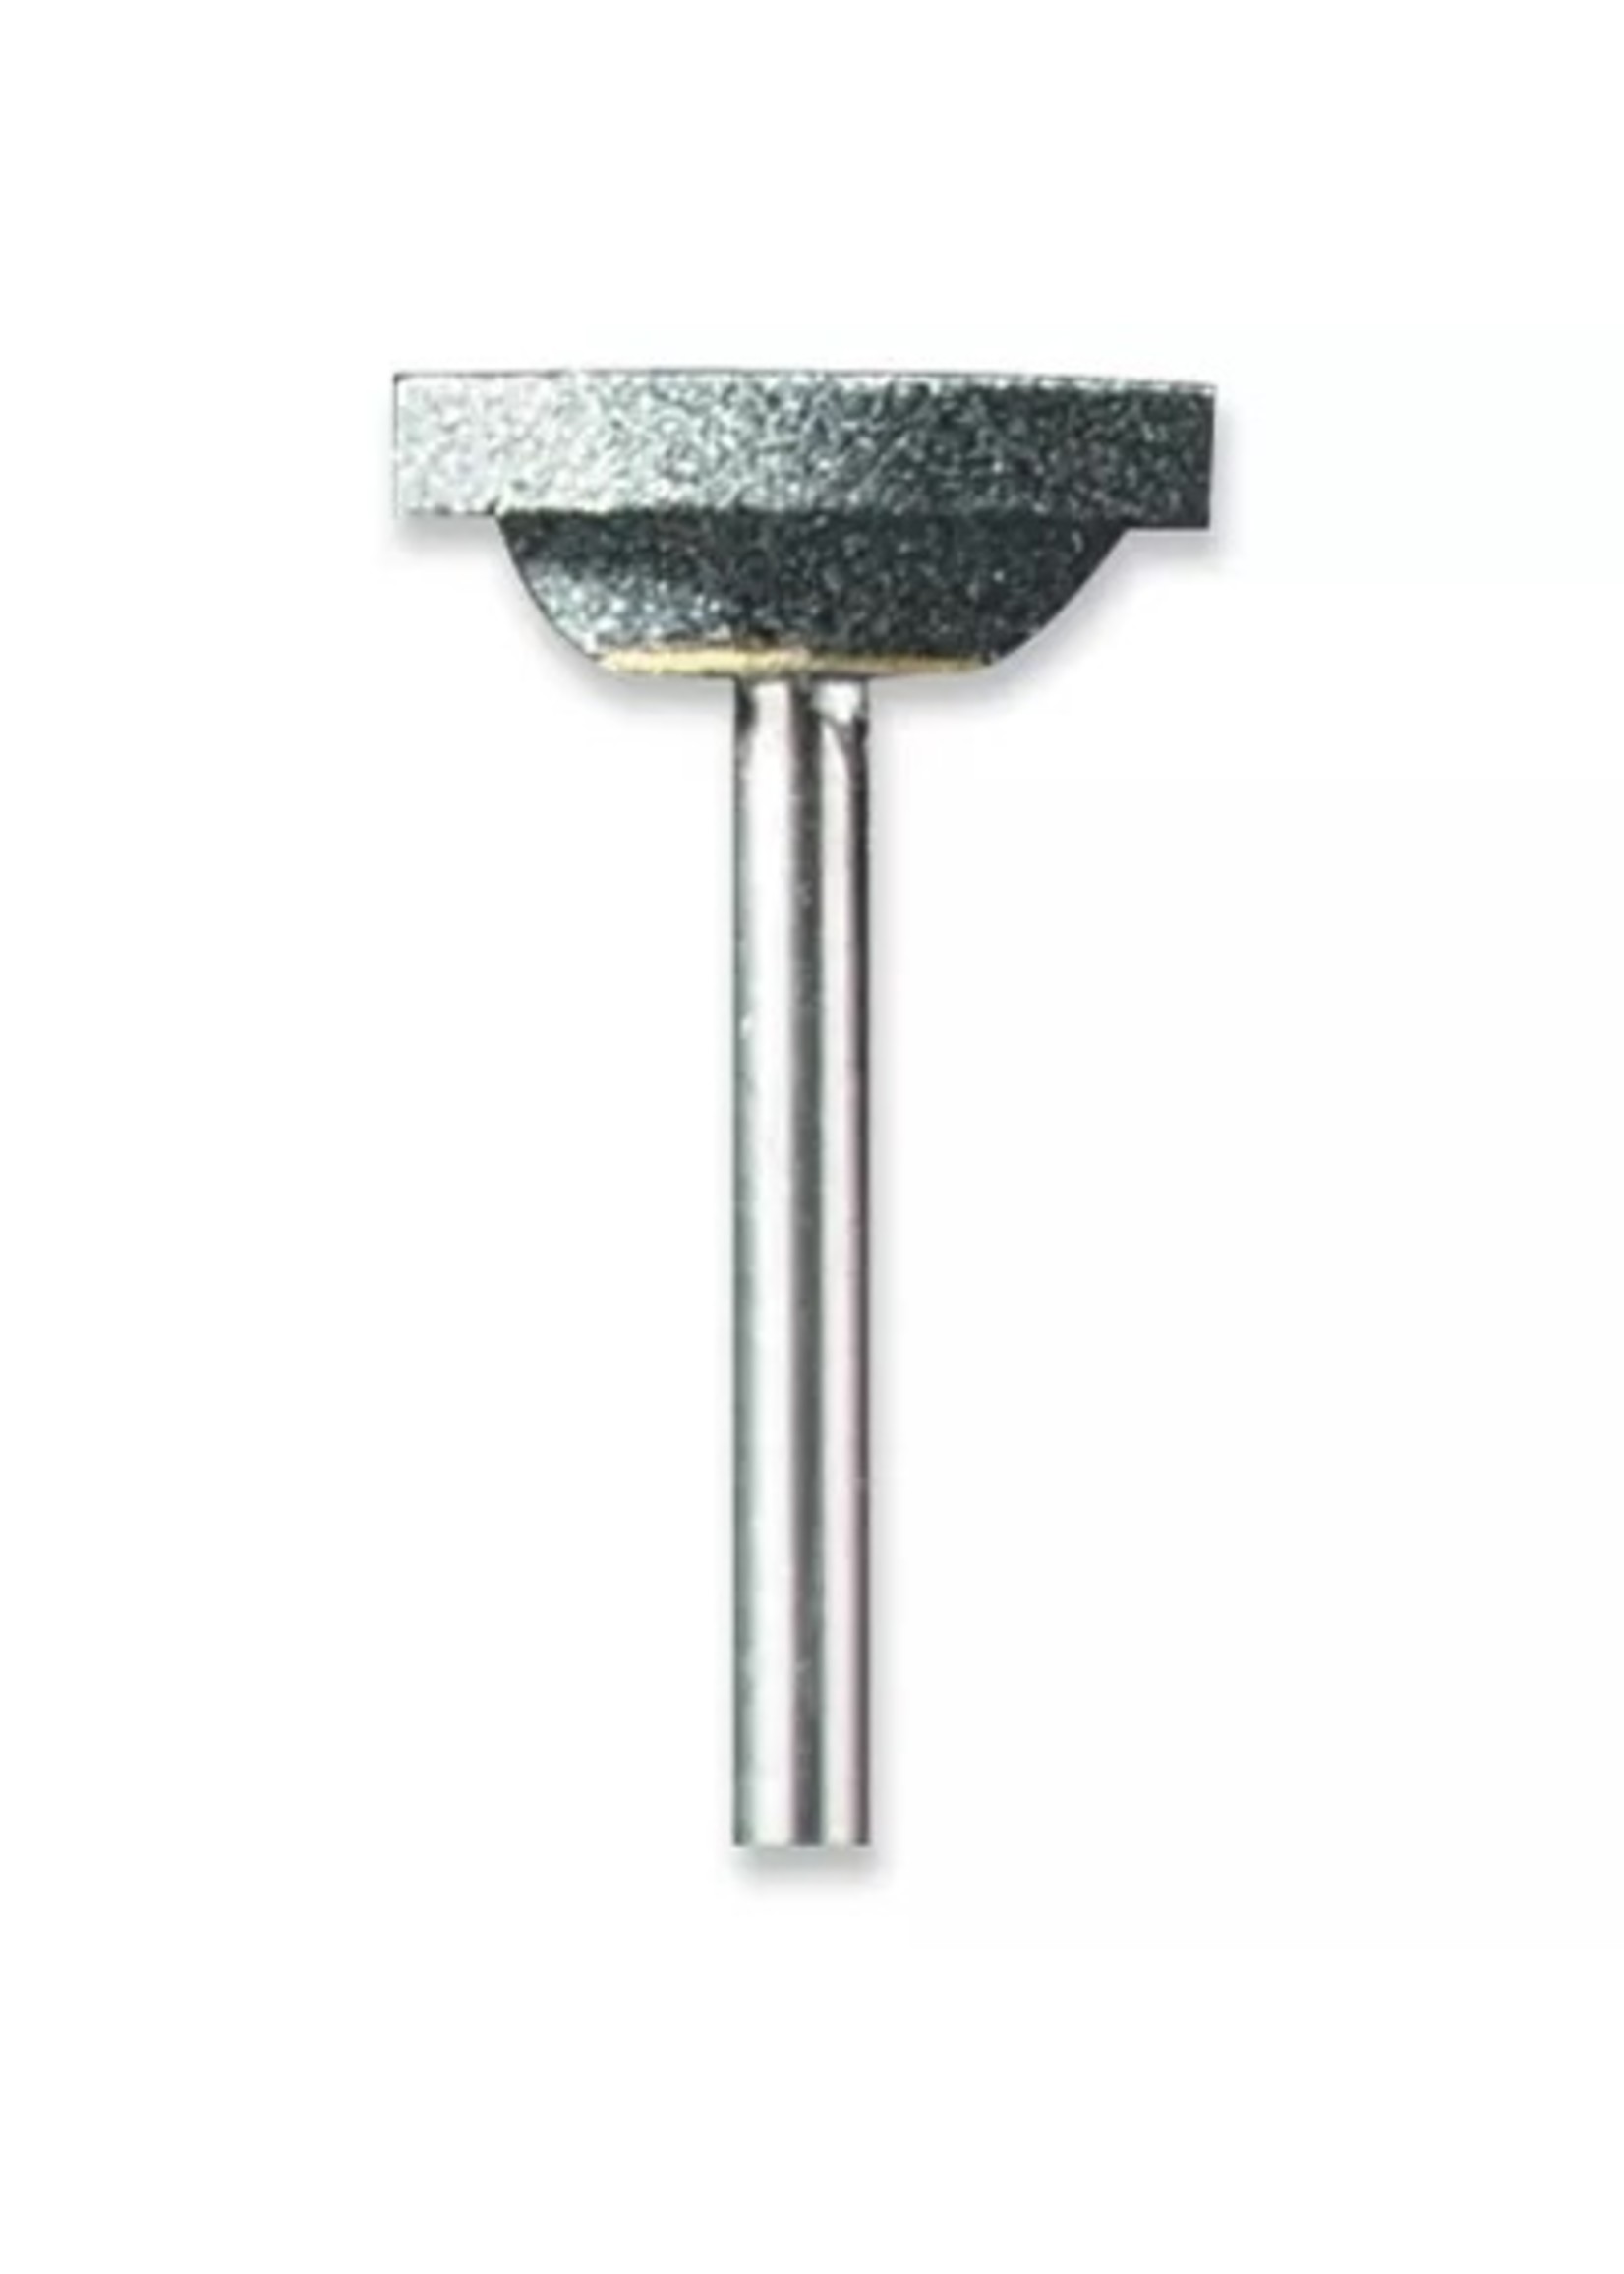 Dremel 85422 - 25/32" Silicon Carbide Grinding Stone